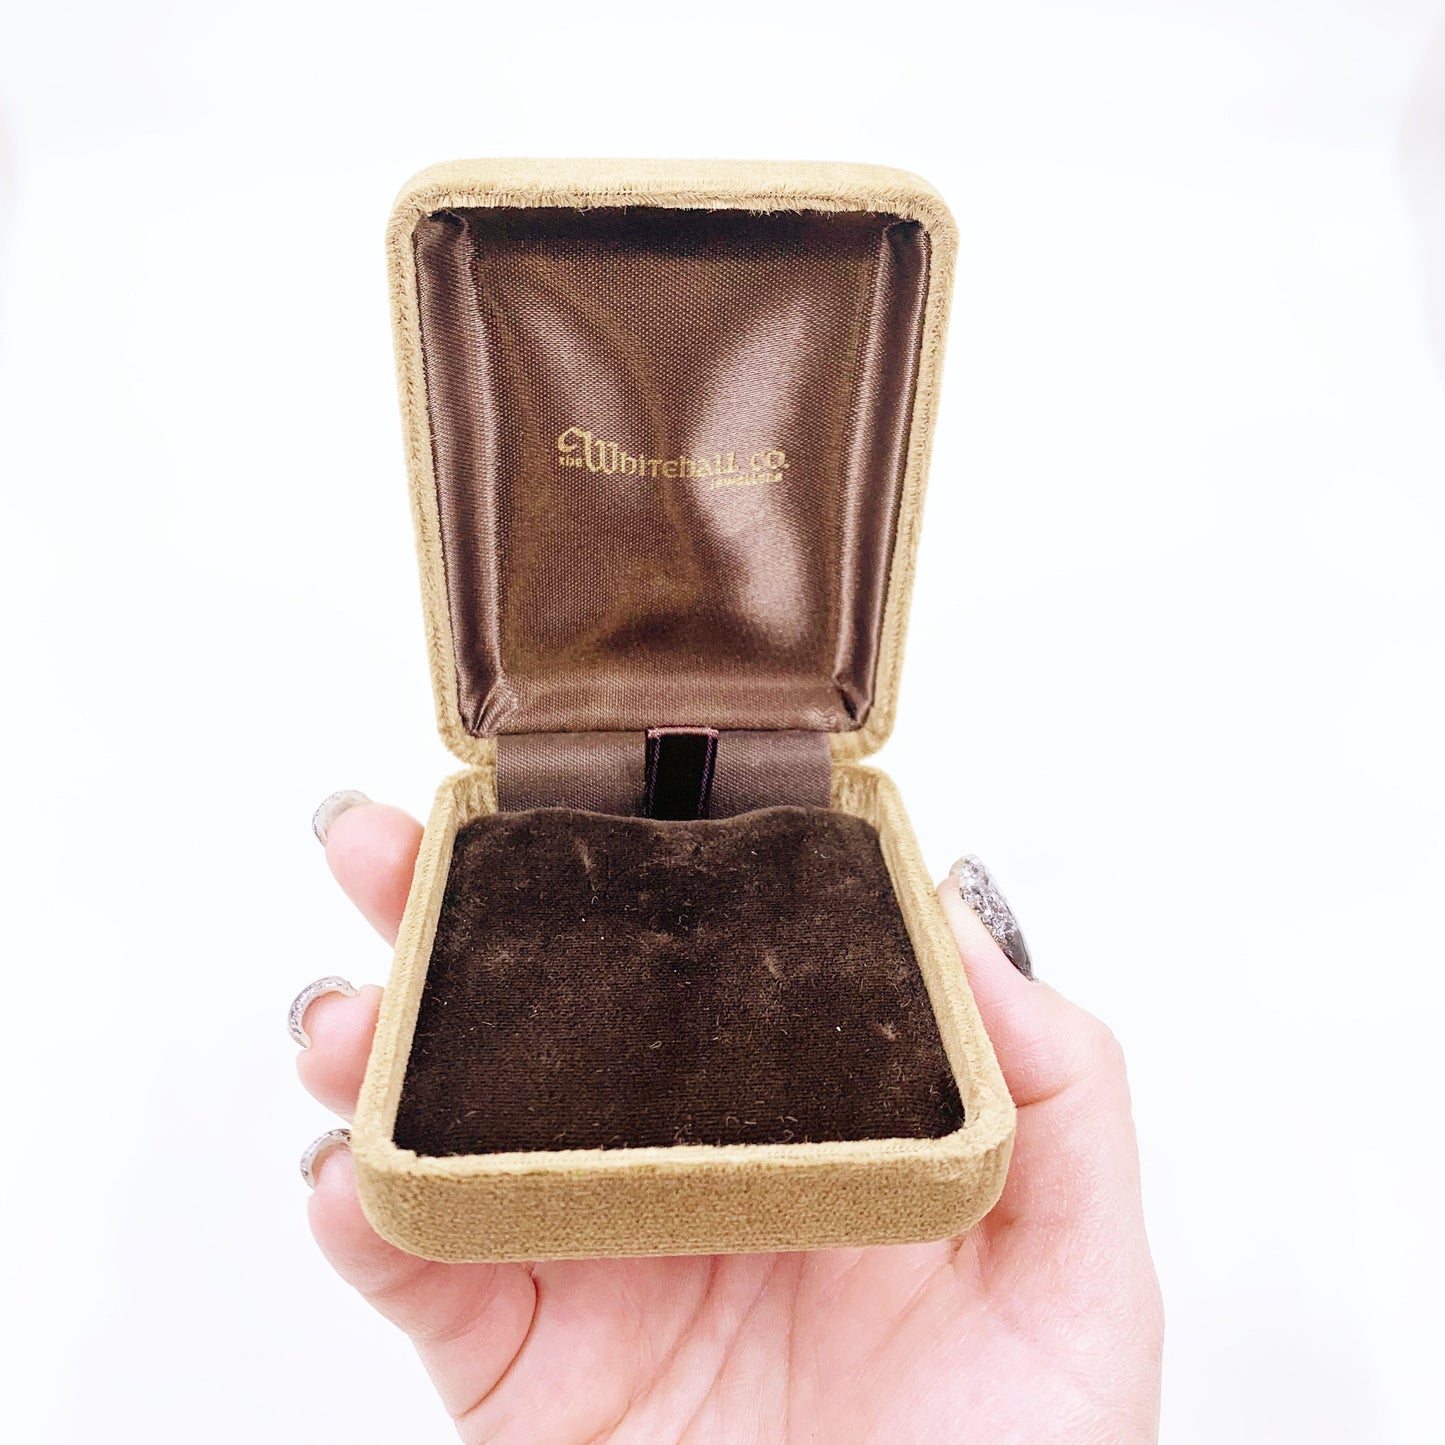 Vintage Whitehall Co Jewellers Necklace Presentation Jewelry Box | Jewelry Gift Box | Necklace Display | Brown Jewelry Display Box